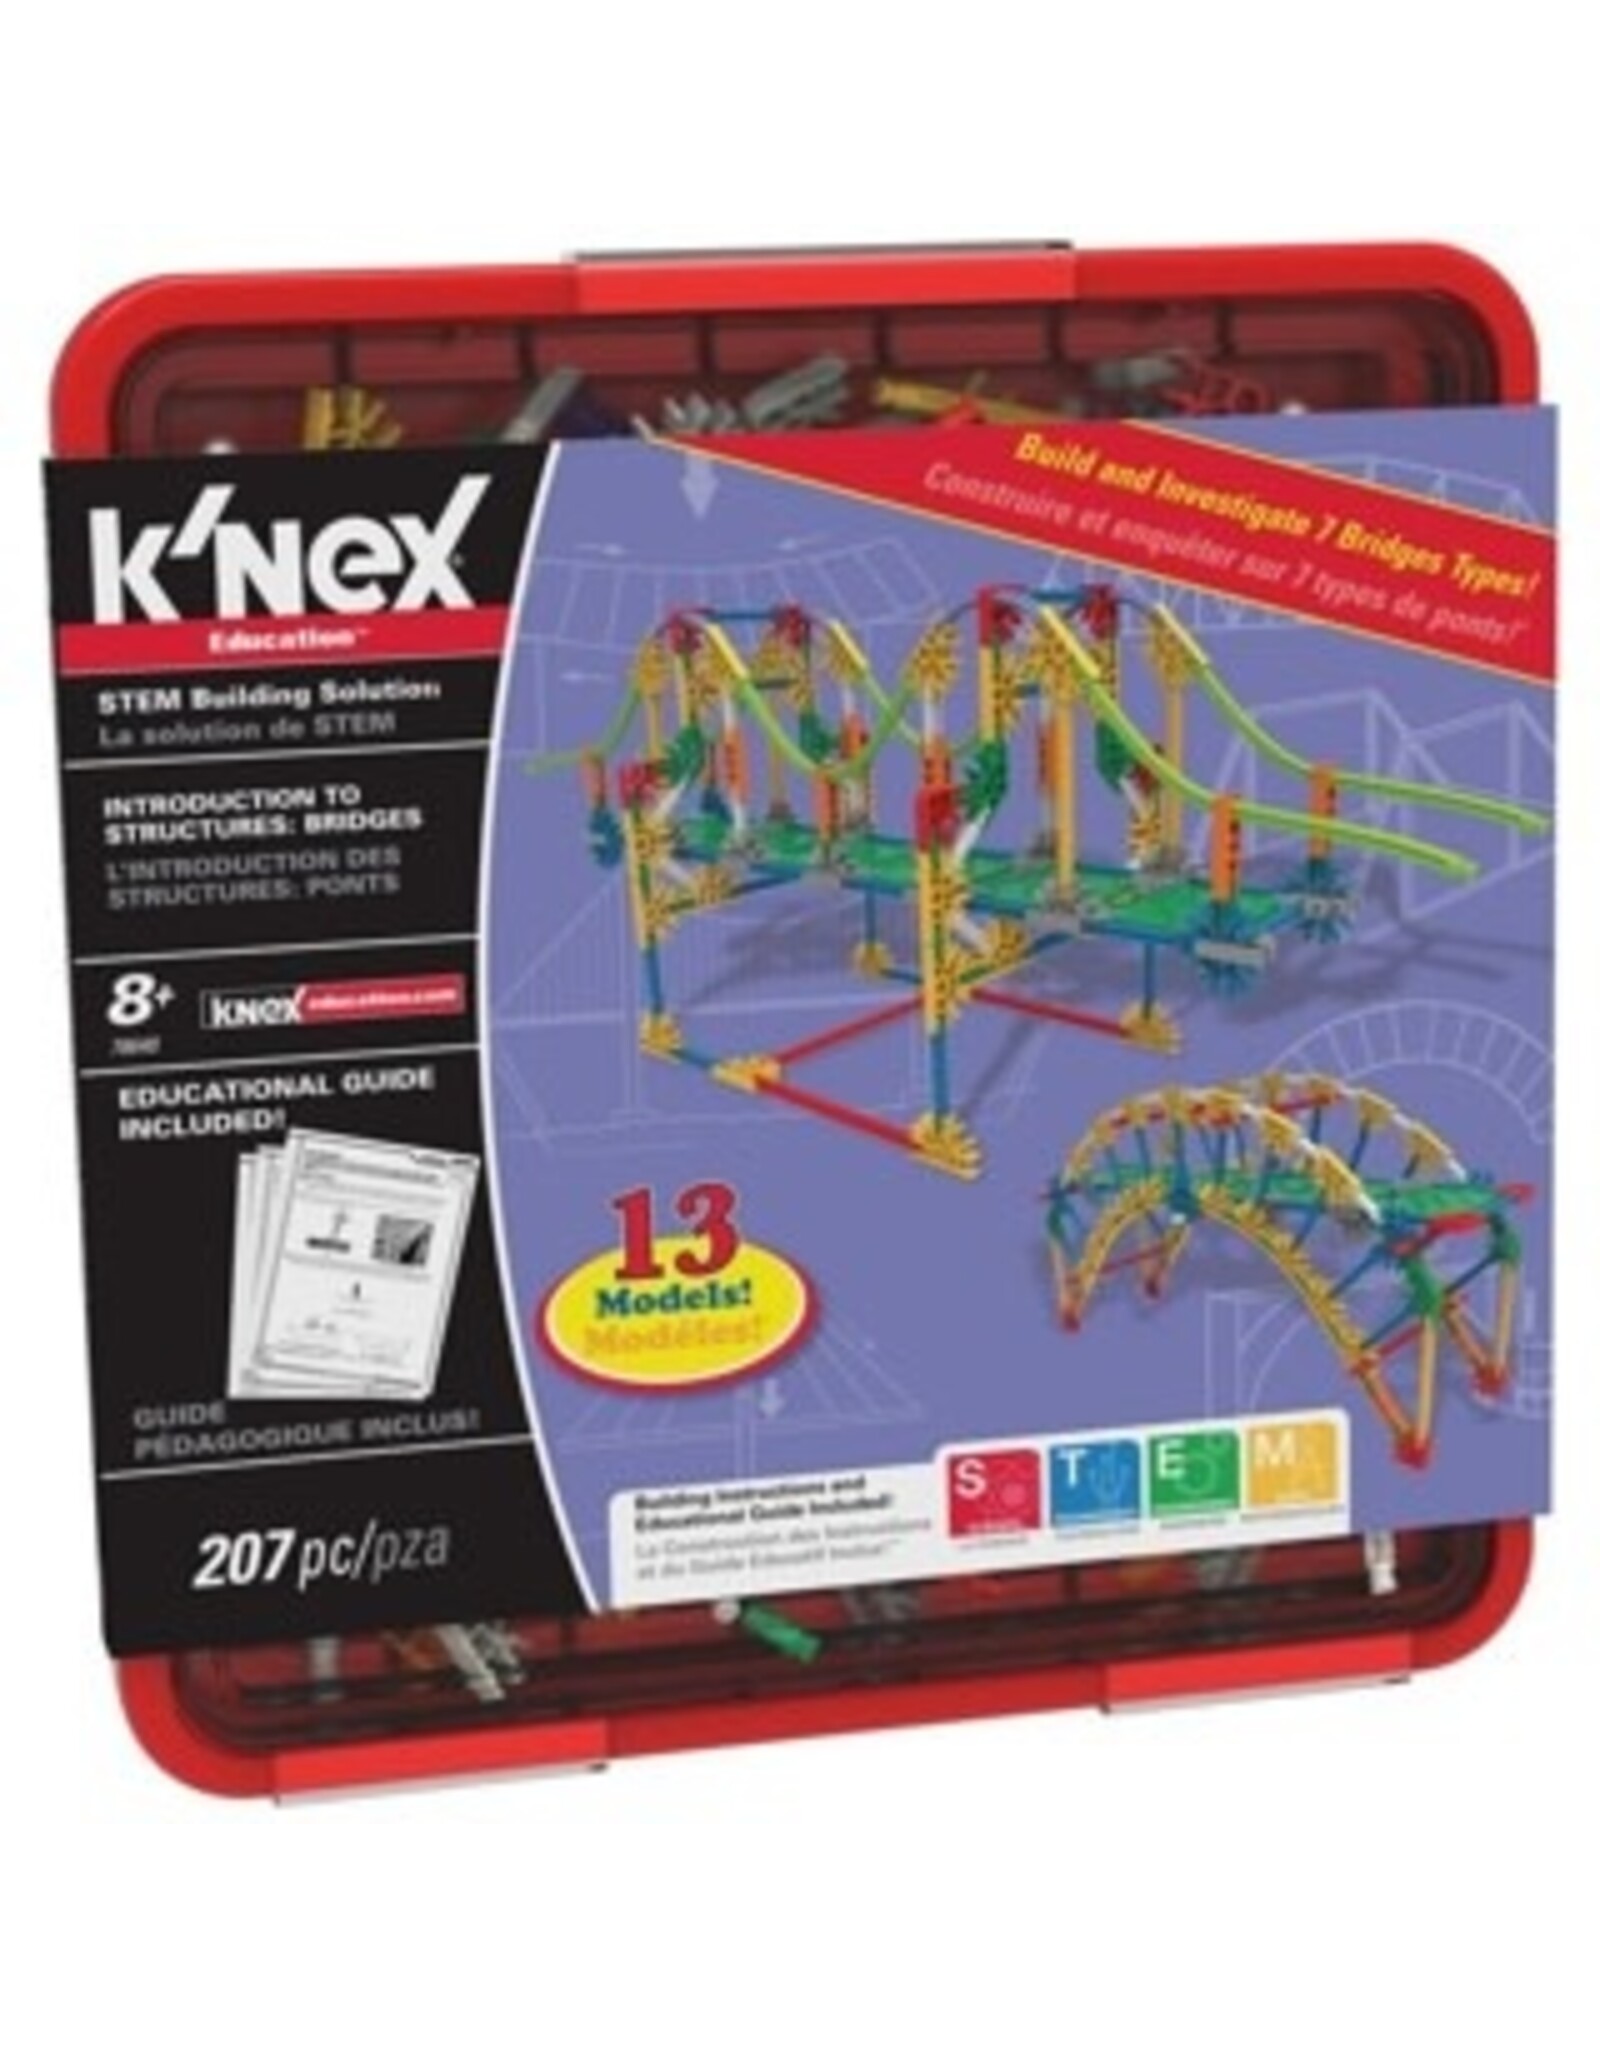 K'Nex K'Nex Introduction to Structures: Bridges 207 Pieces